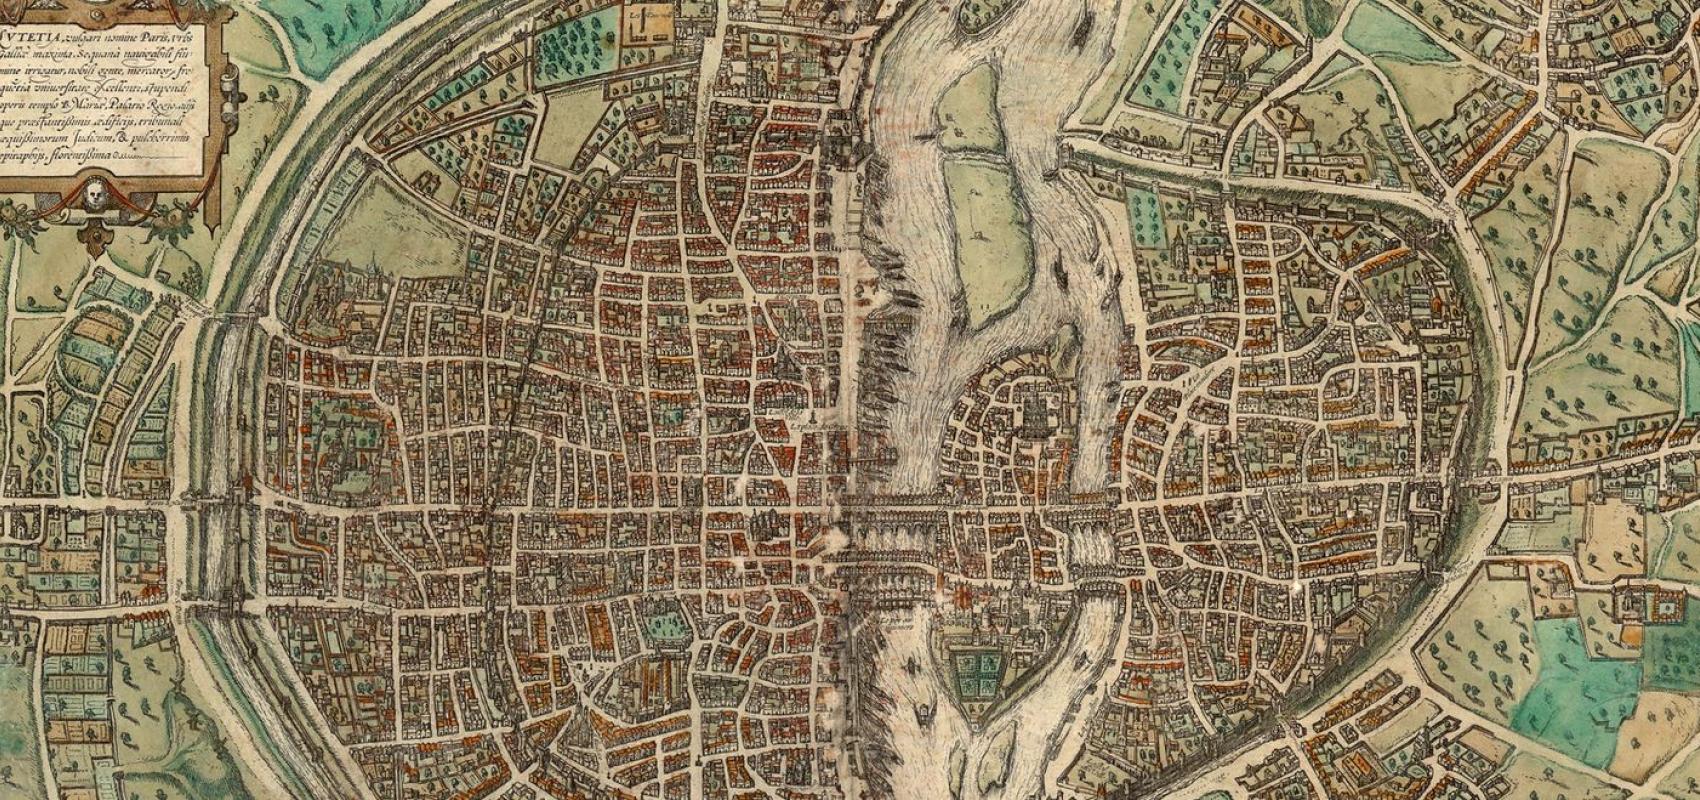 Lutetia vulgari nomine Paris, urbs Galliae maxima - 1599 - BnF, département des Cartes et plans